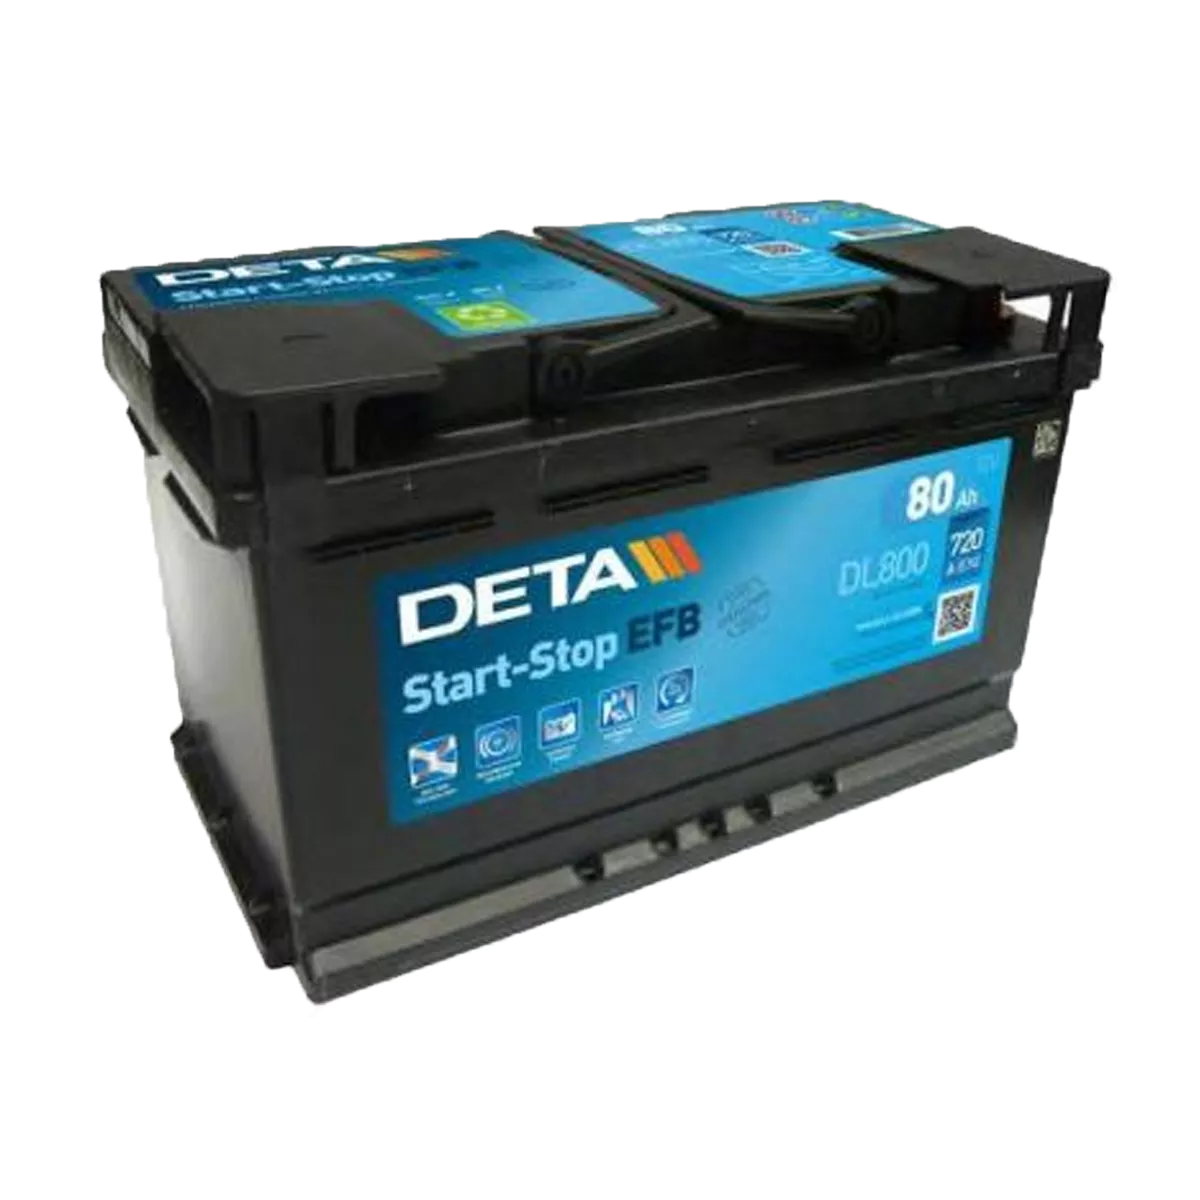 Автомобильный аккумулятор DETA 6CT-80АH АзЕ EFB Start-Stop (DL800)